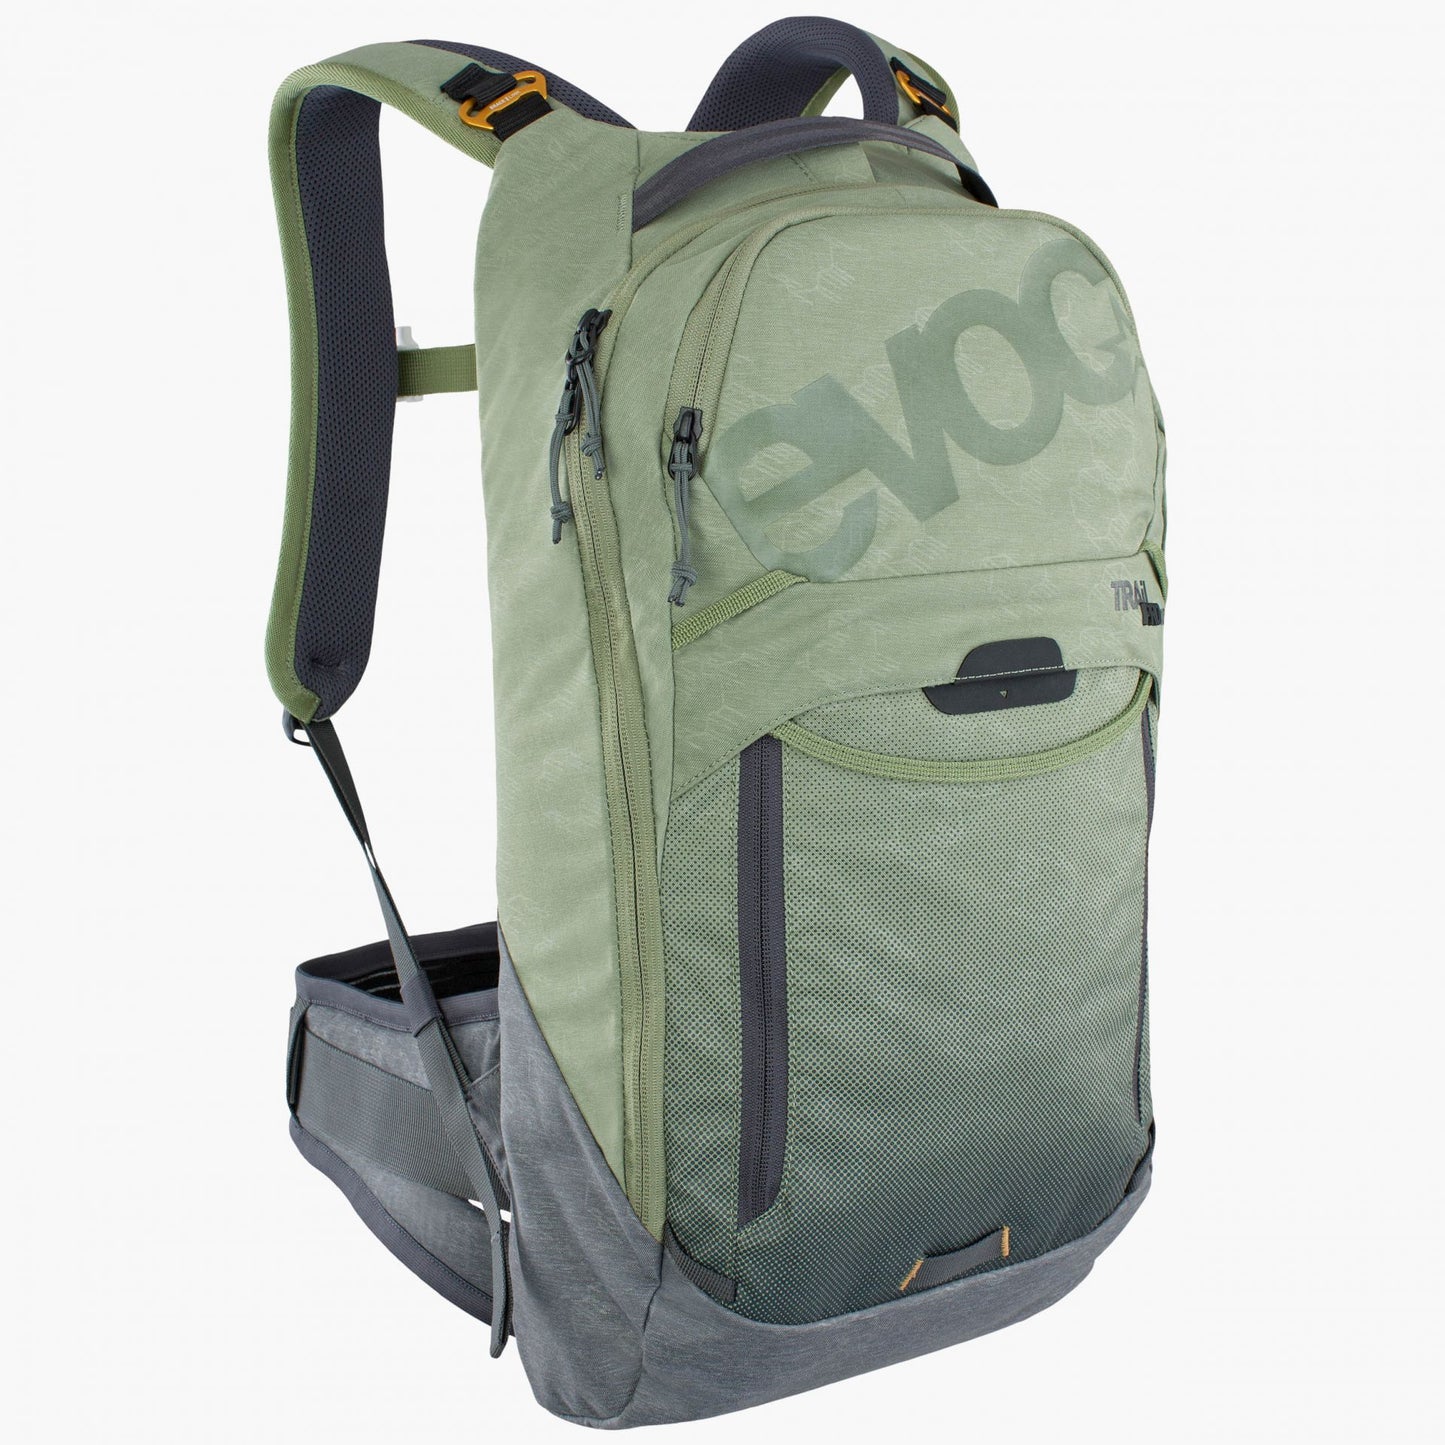 EVOC Trail Pro 16 Backpack